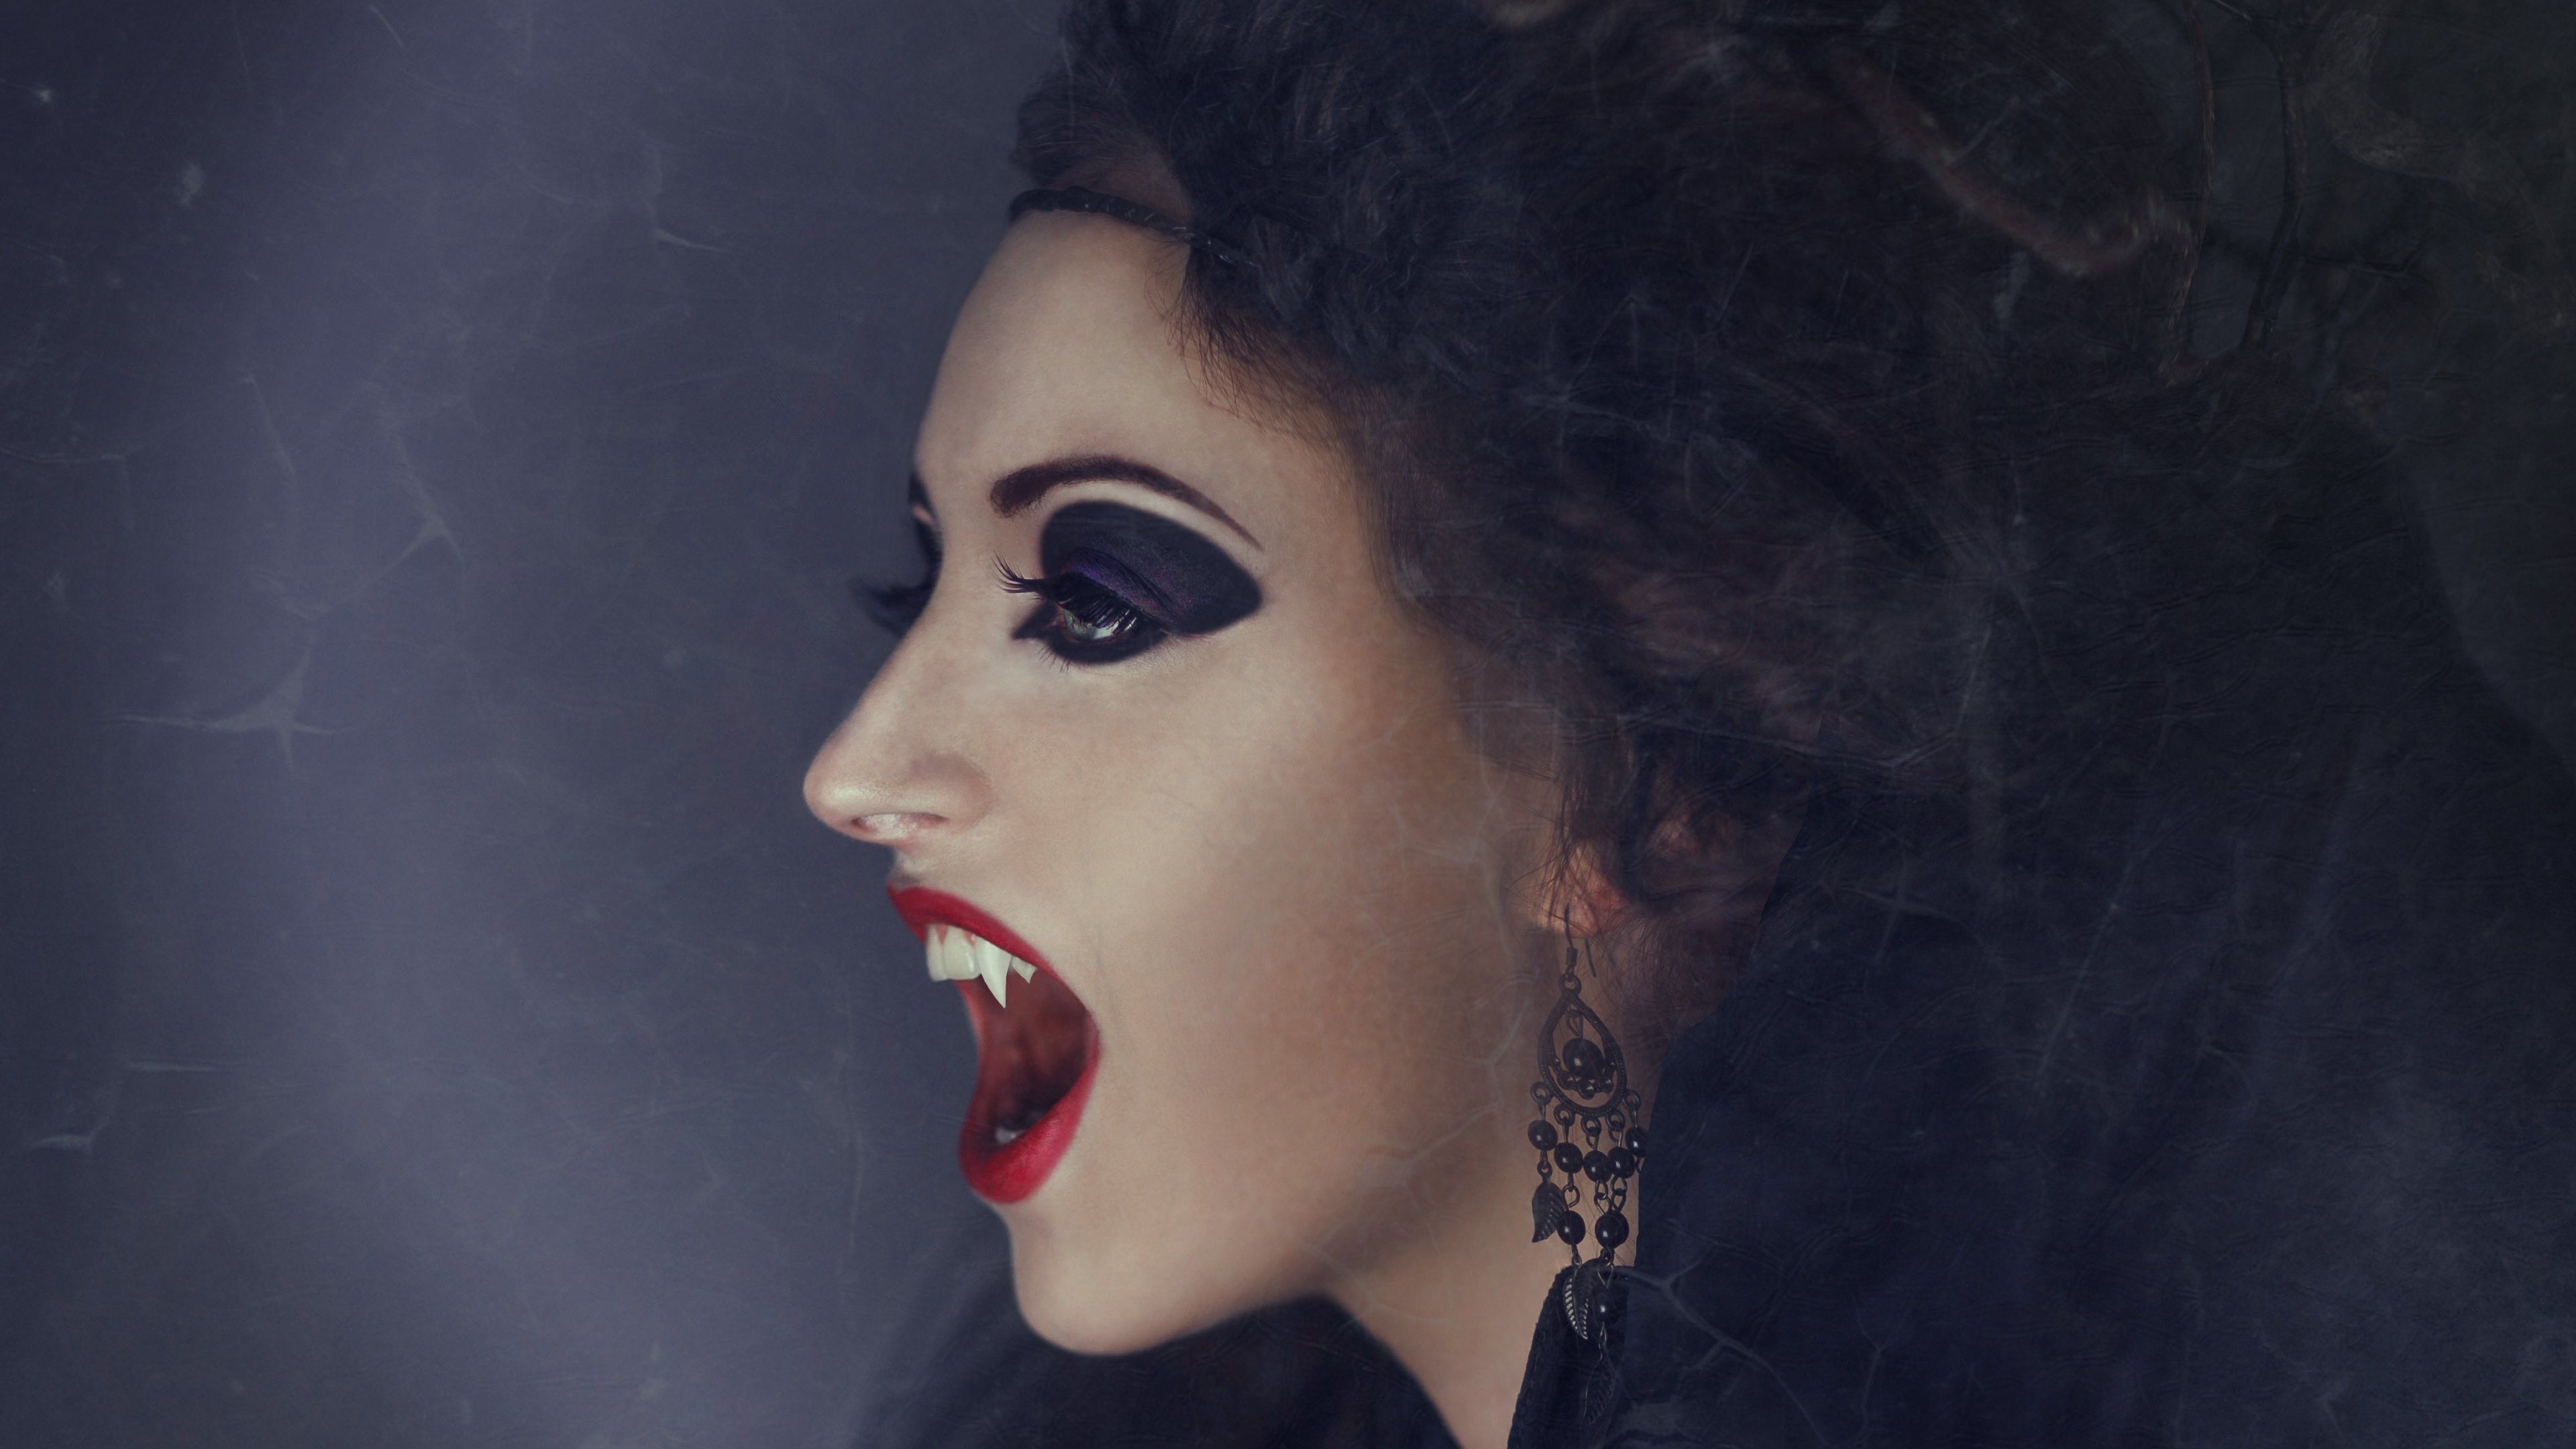 Witch+Vampire+Girl+Halloween+costume+2+UHD.jpg